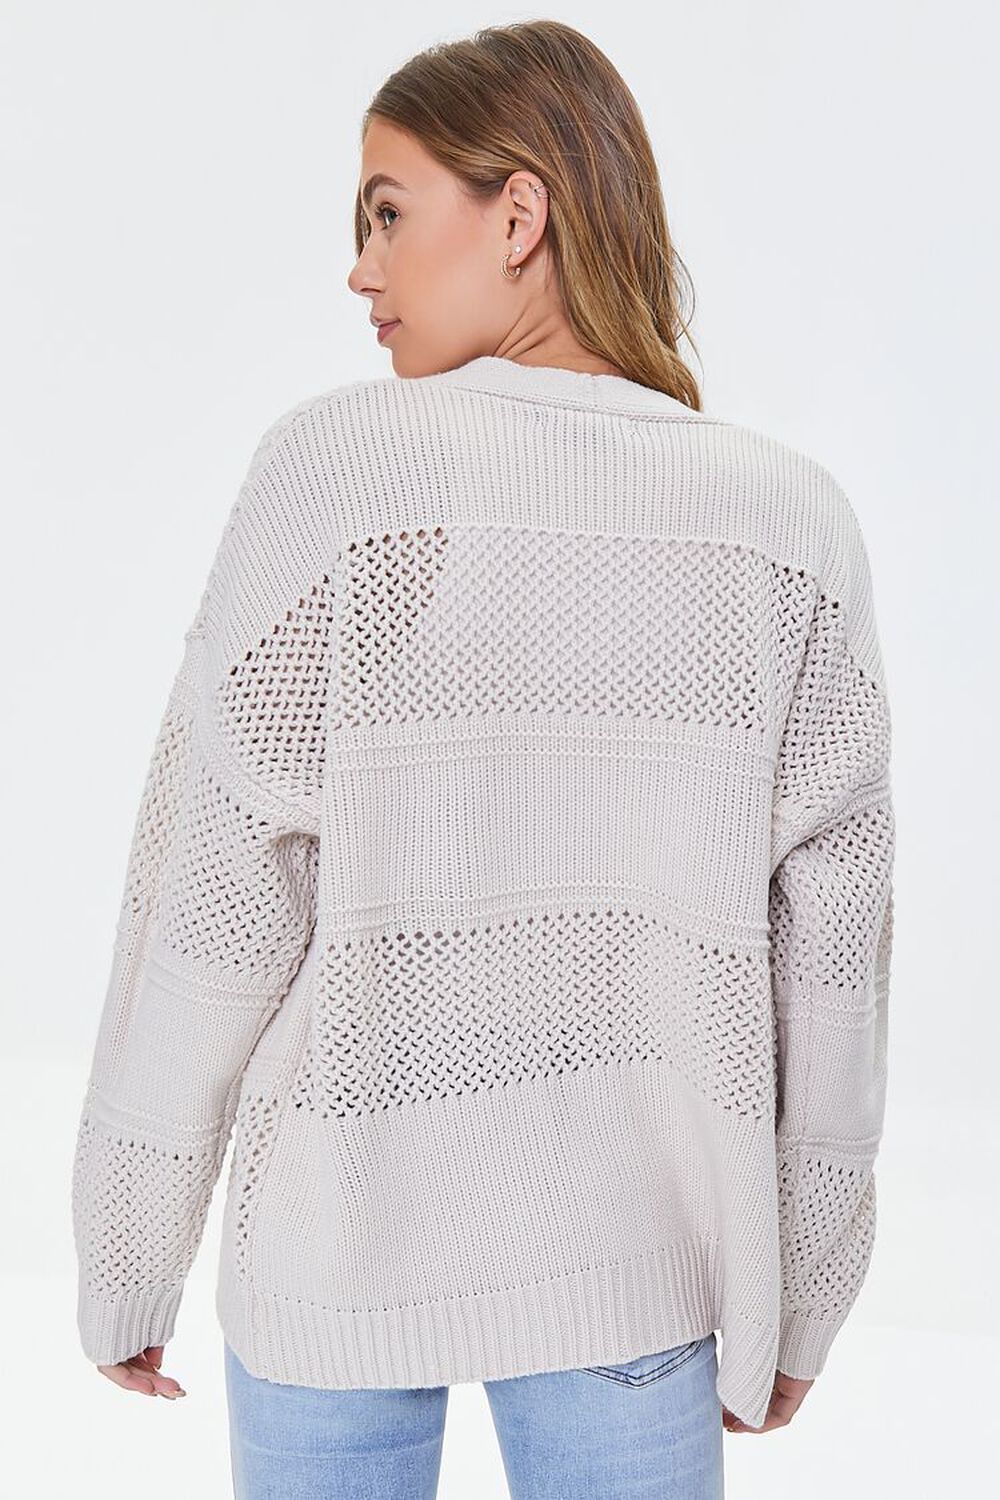 SAND Open-Knit Cardigan Sweater, image 3